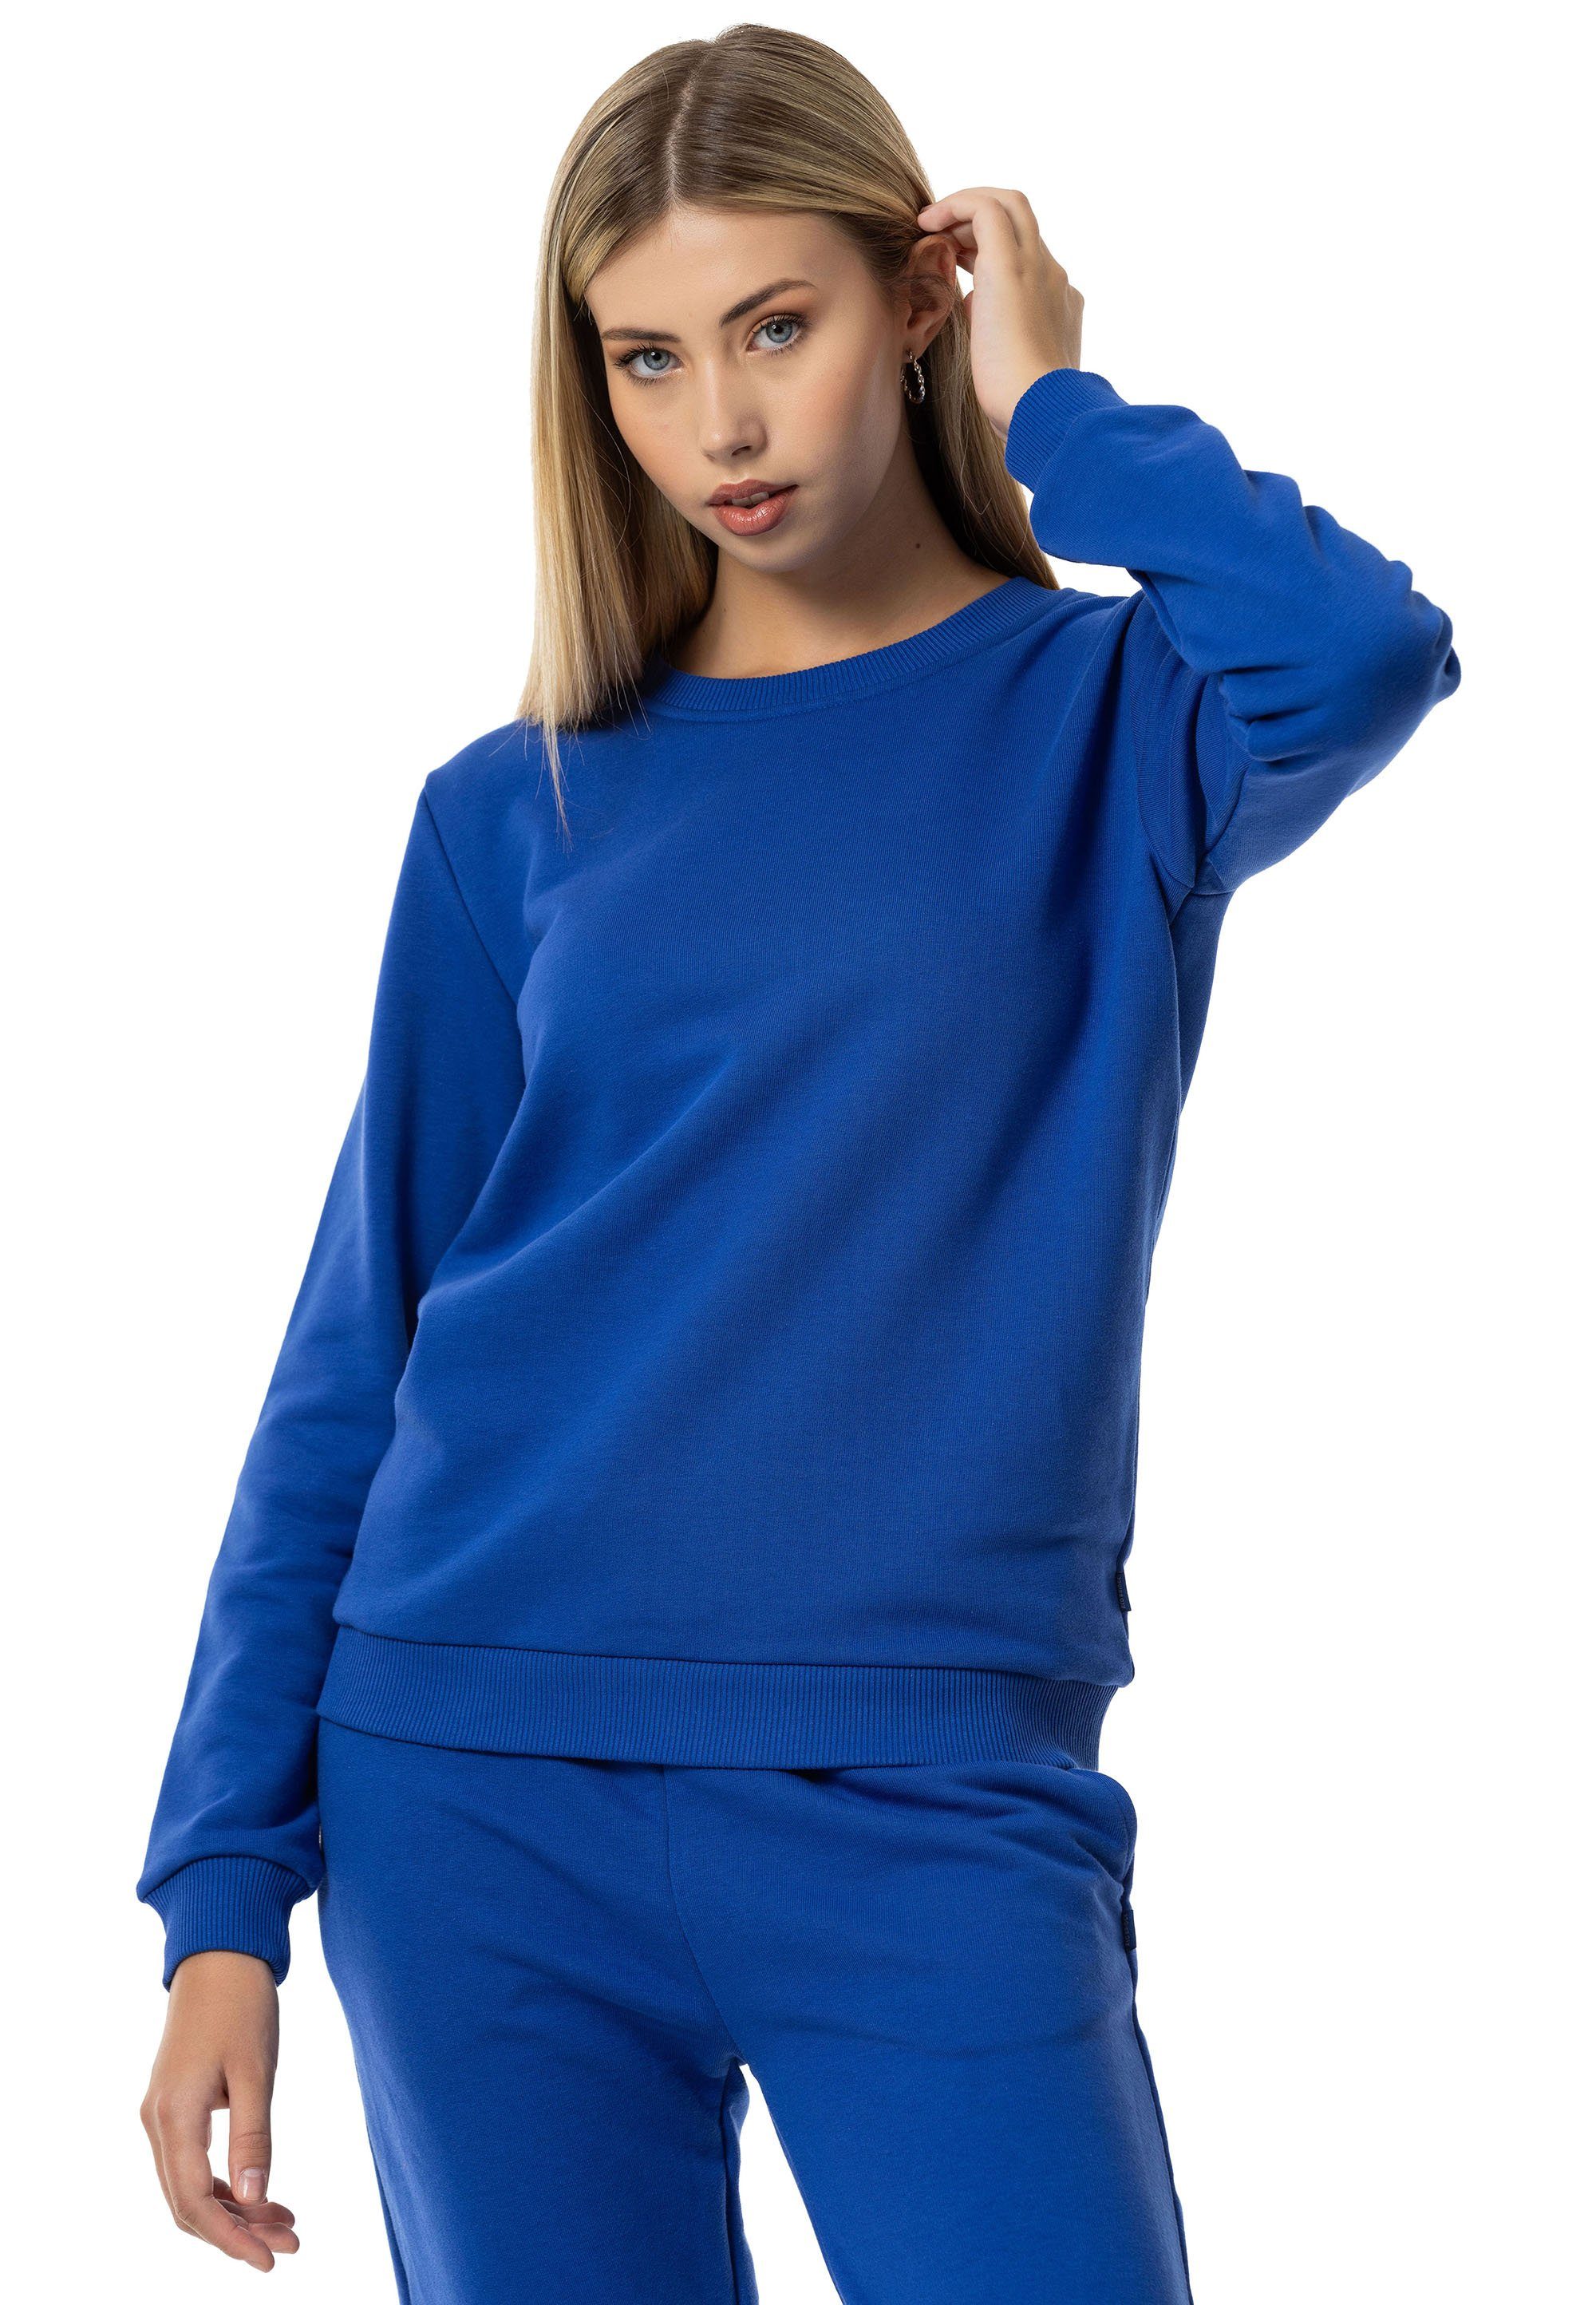 RedBridge Saxeblau Sweatshirt Rundhals Qualität Pullover Premium